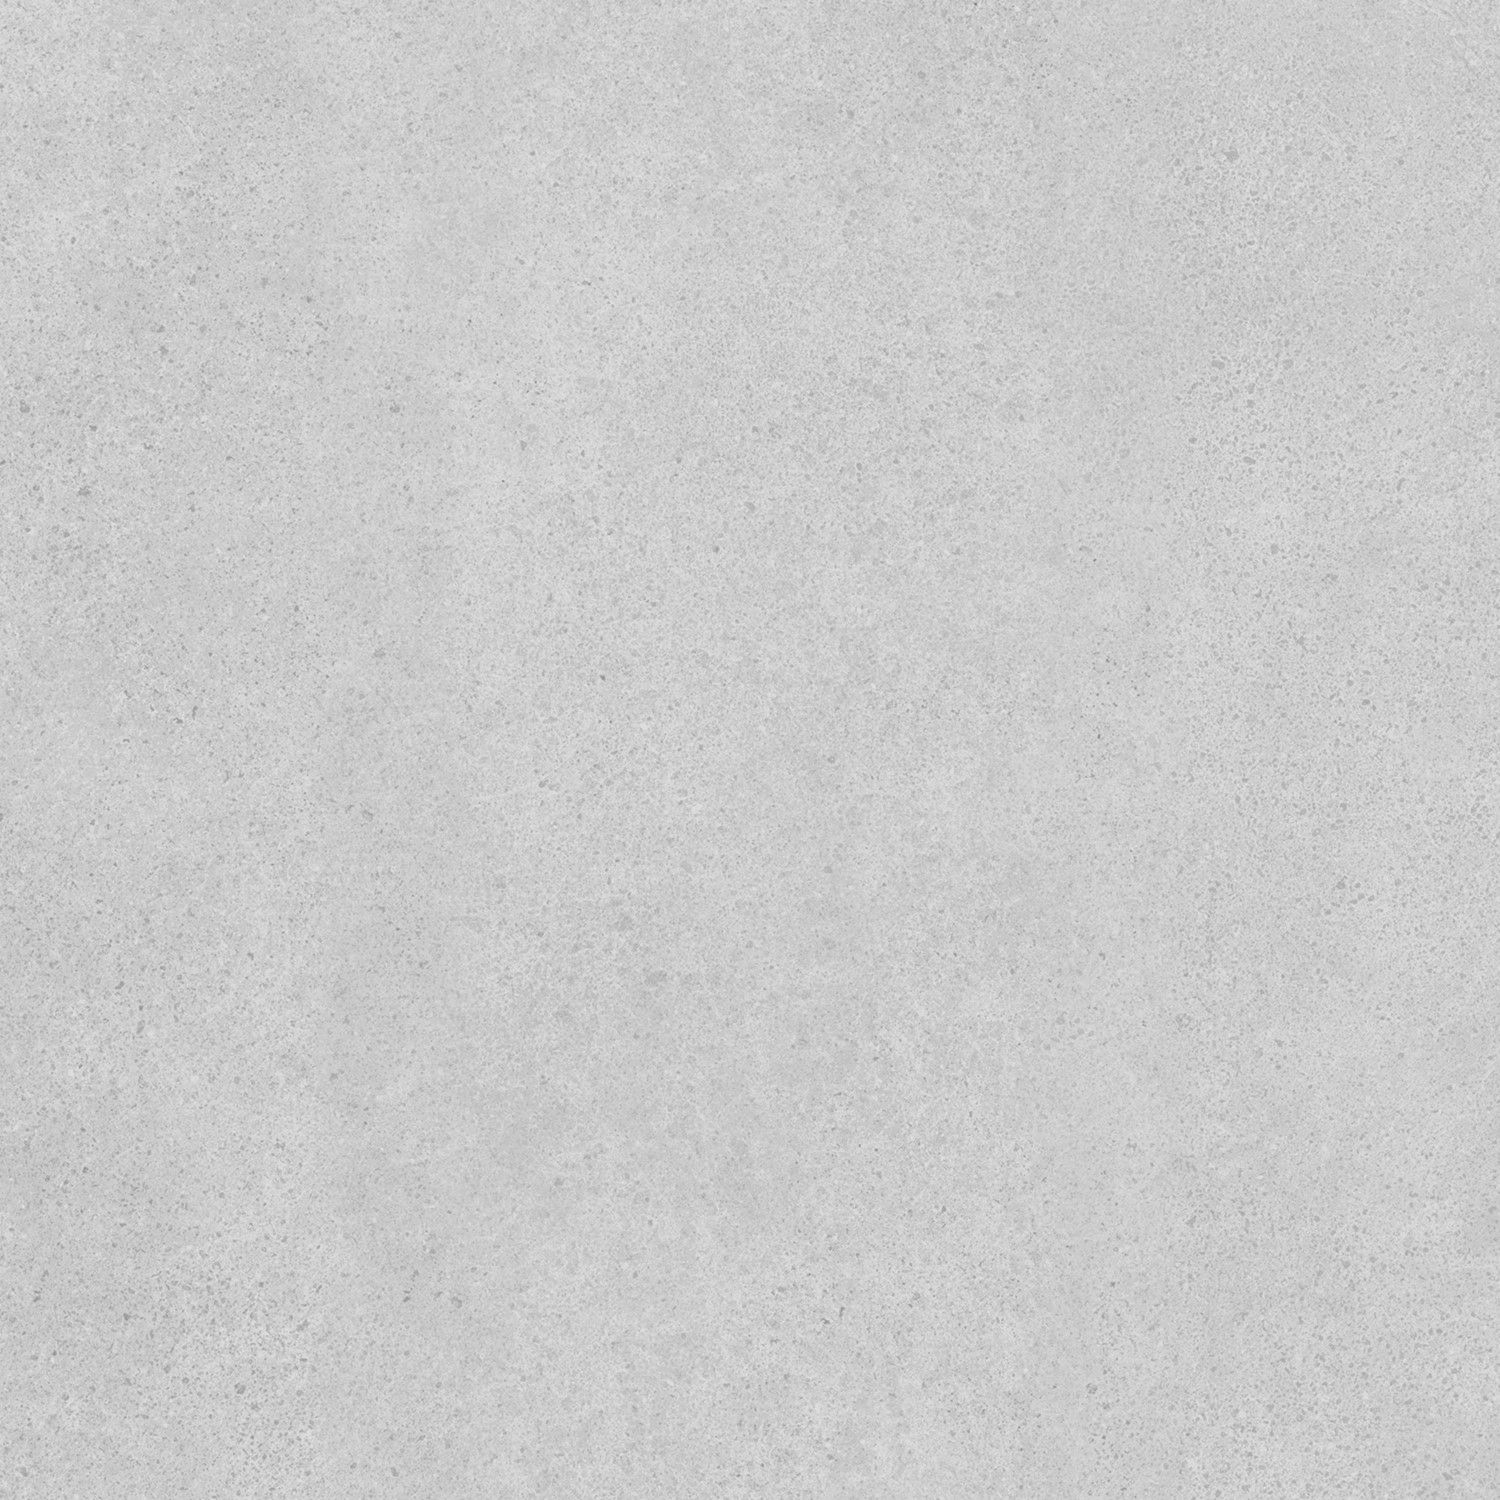 Плитка Kerama Marazzi Milano Безана SG457900R серый светлый обрезной 50,2x50,2x0,95 см плитка kerama marazzi milano порфидо sg402600n серый светлый 9 9x40 2x0 8 см